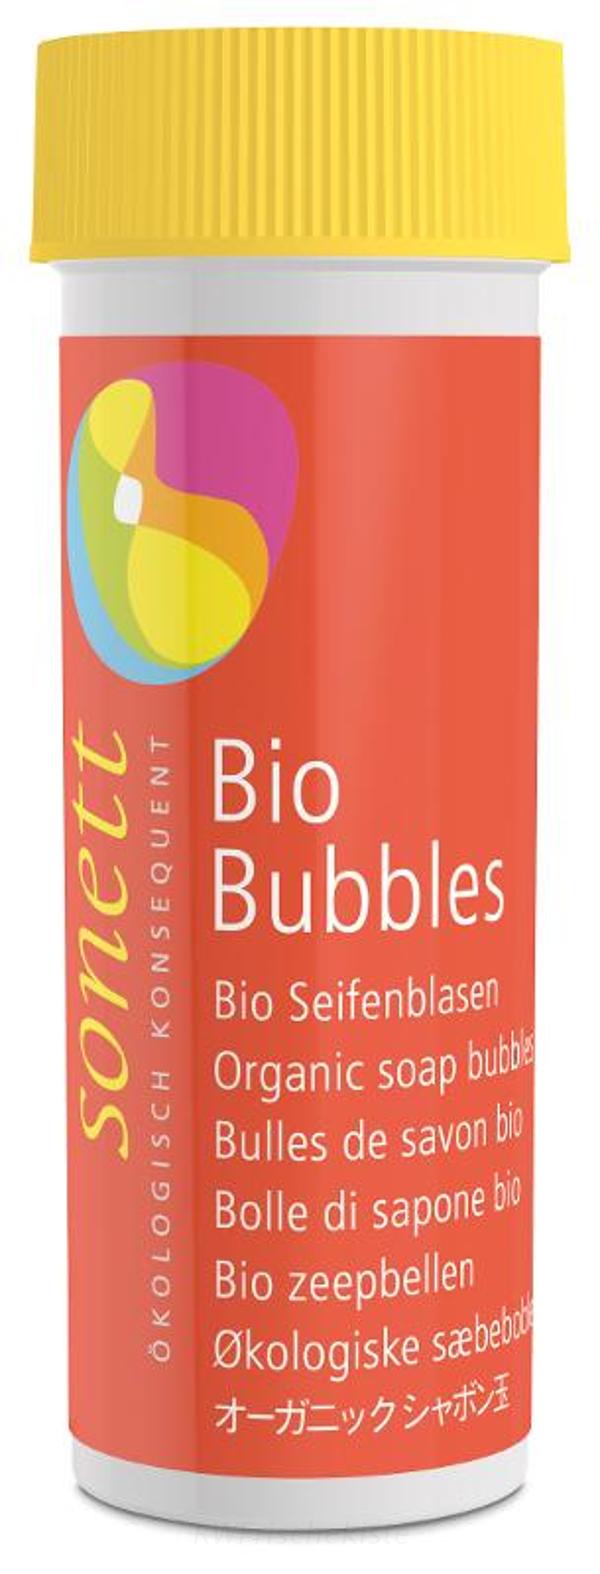 Produktfoto zu Seifenblasen Bio Bubbles